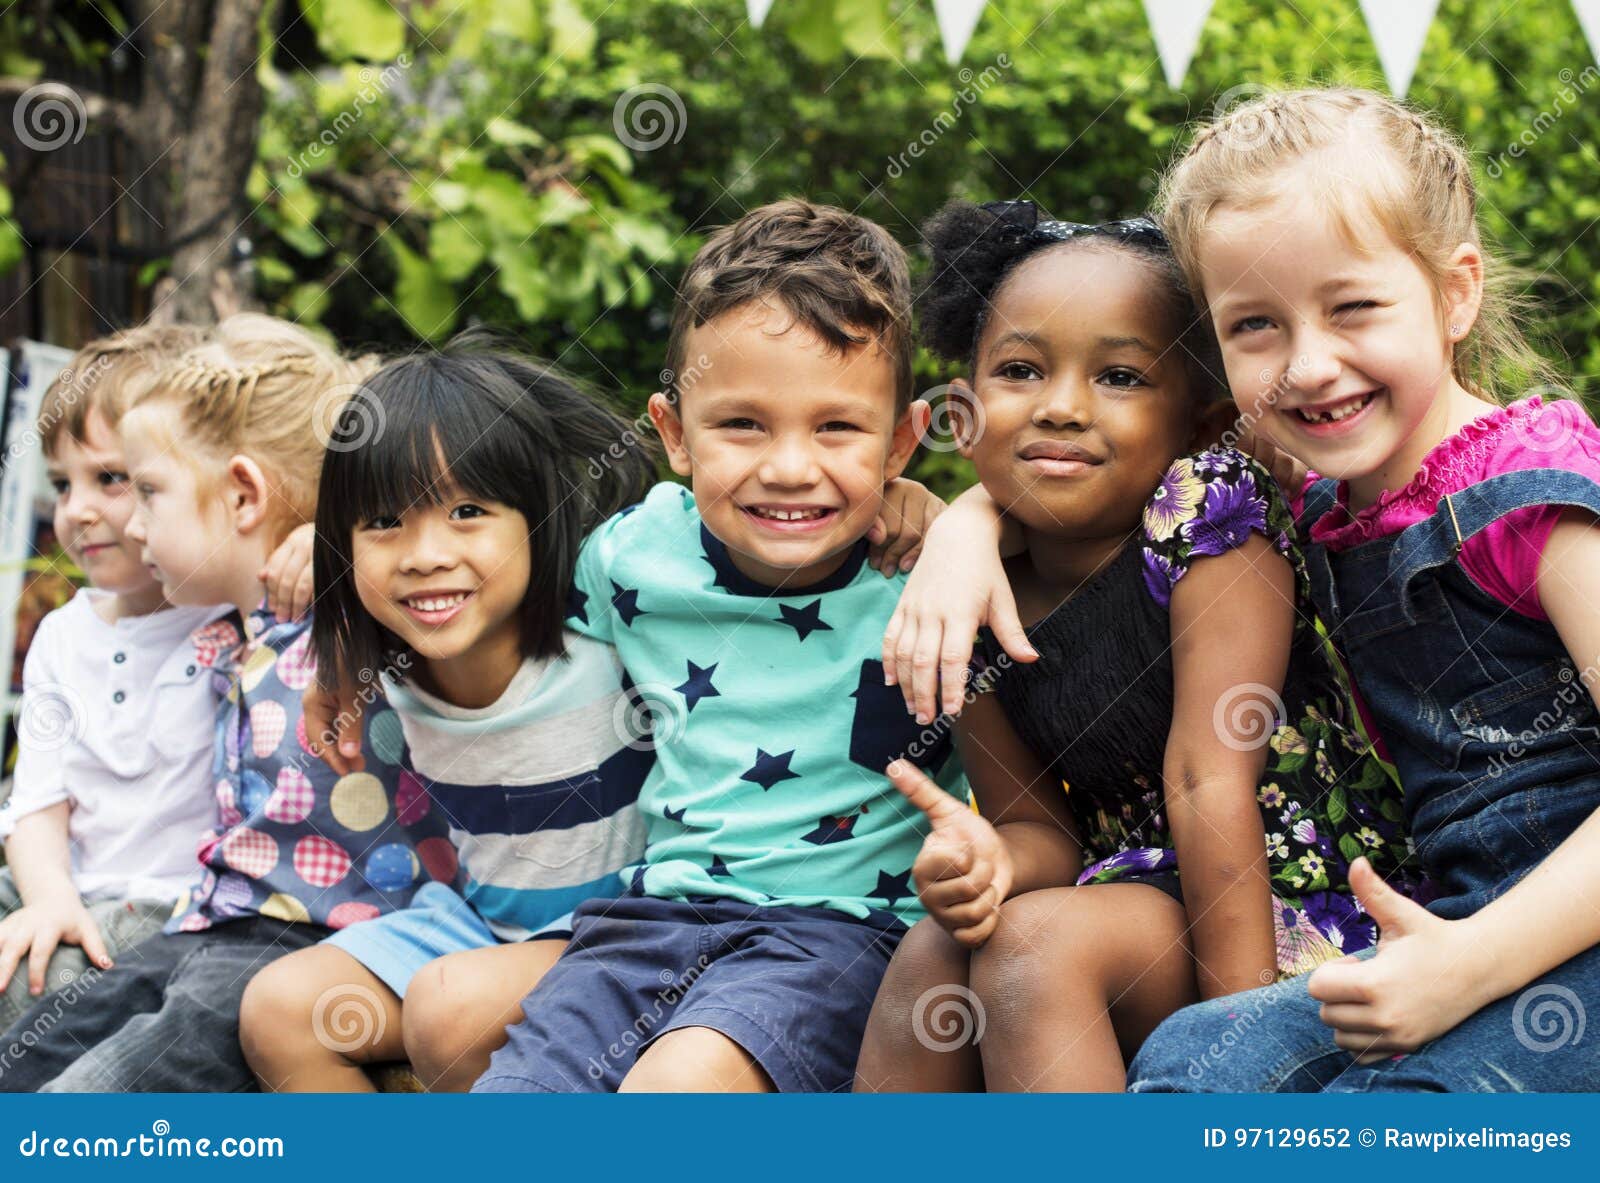 group of kindergarten kids friends arm around sitting and smiling fun